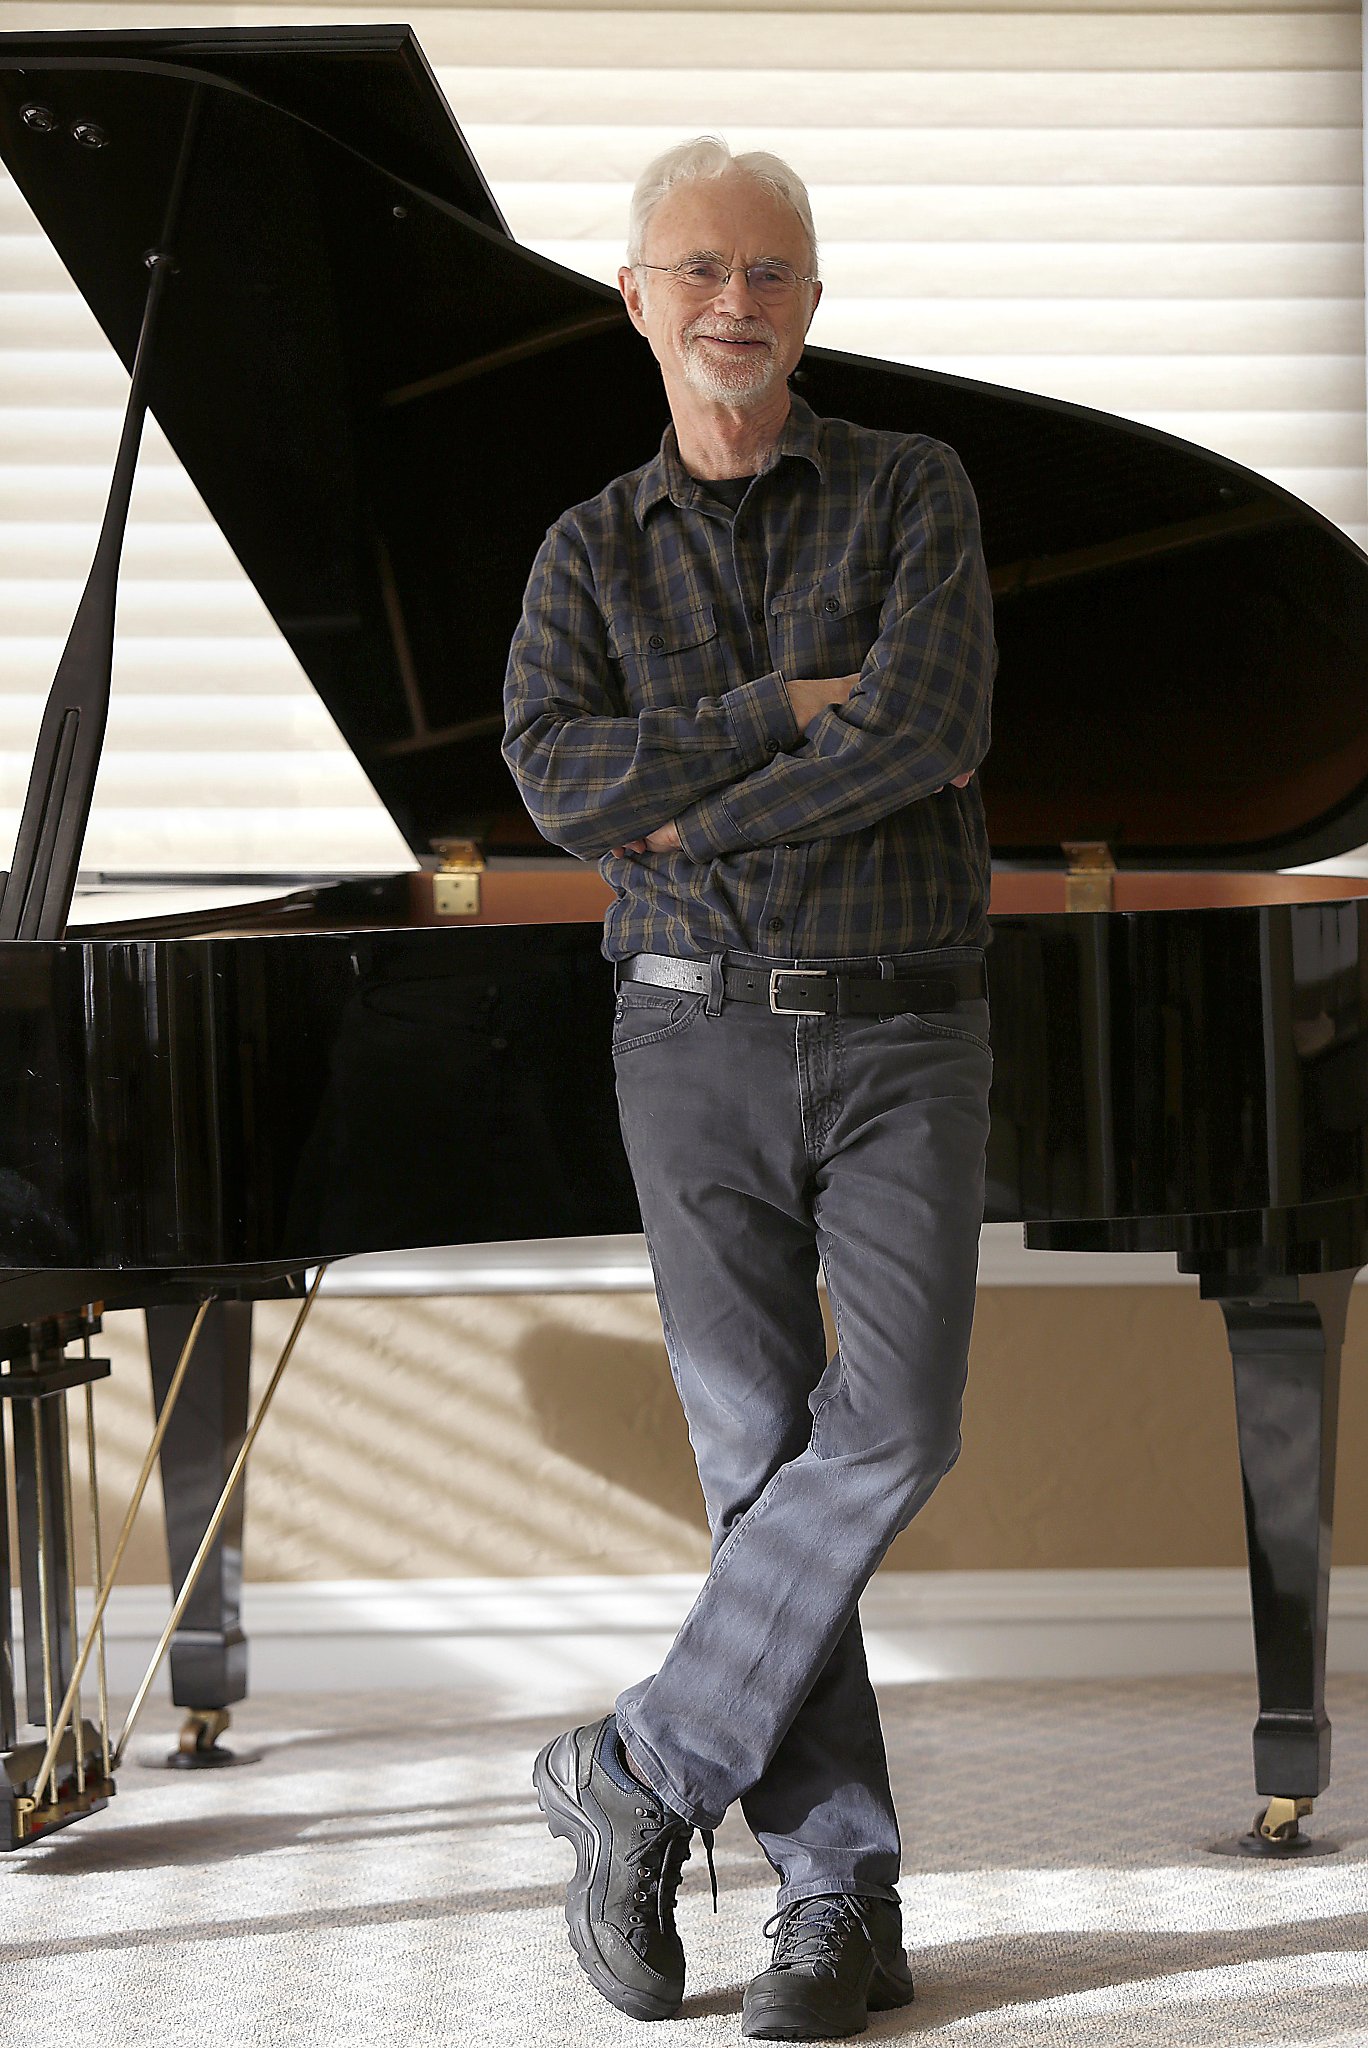 john adams composer